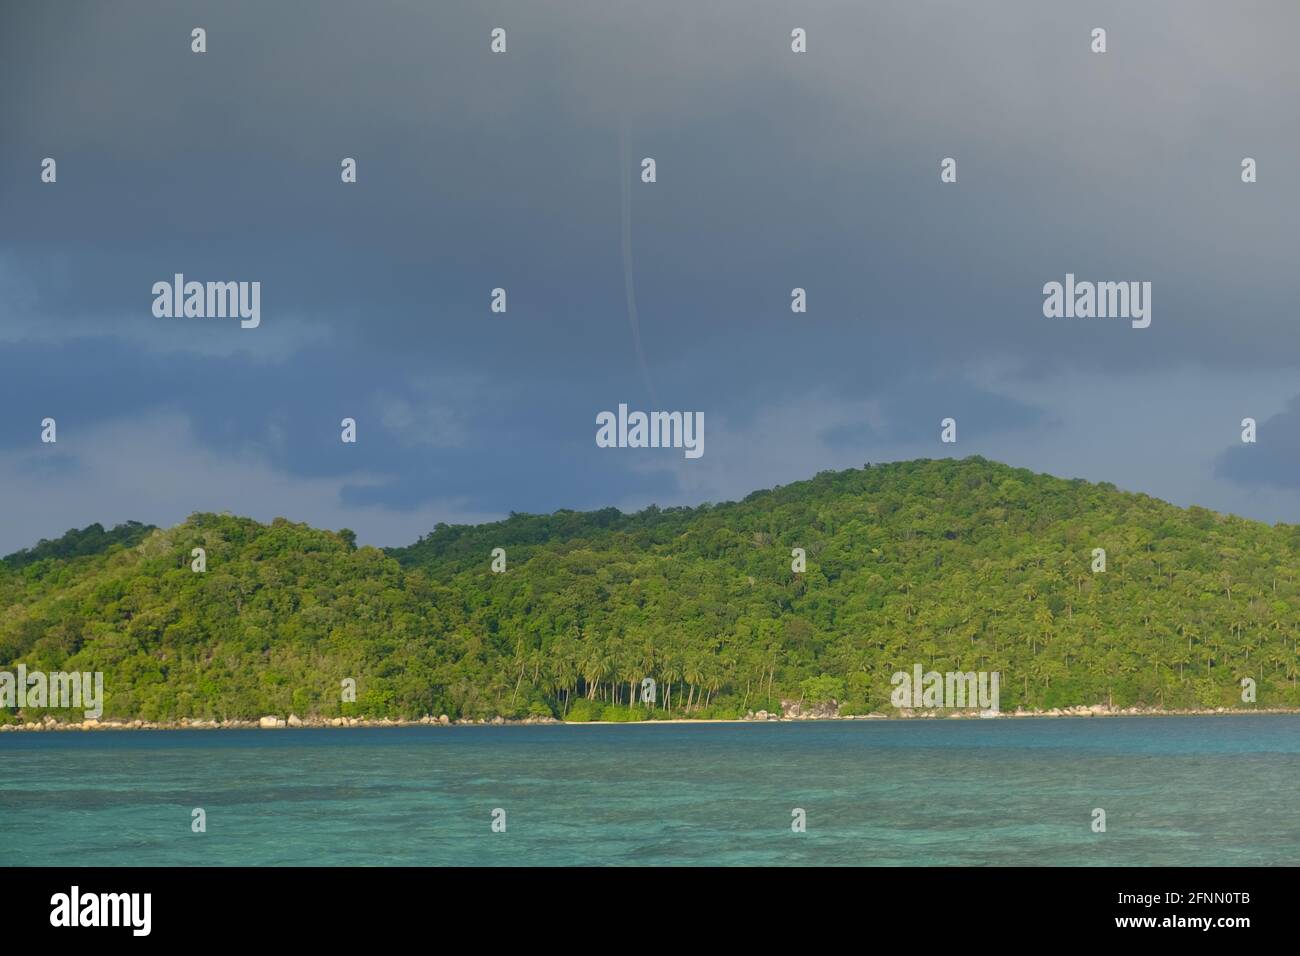 Indonesia Anambas Islands - Telaga Island coastline and waterspout Stock Photo